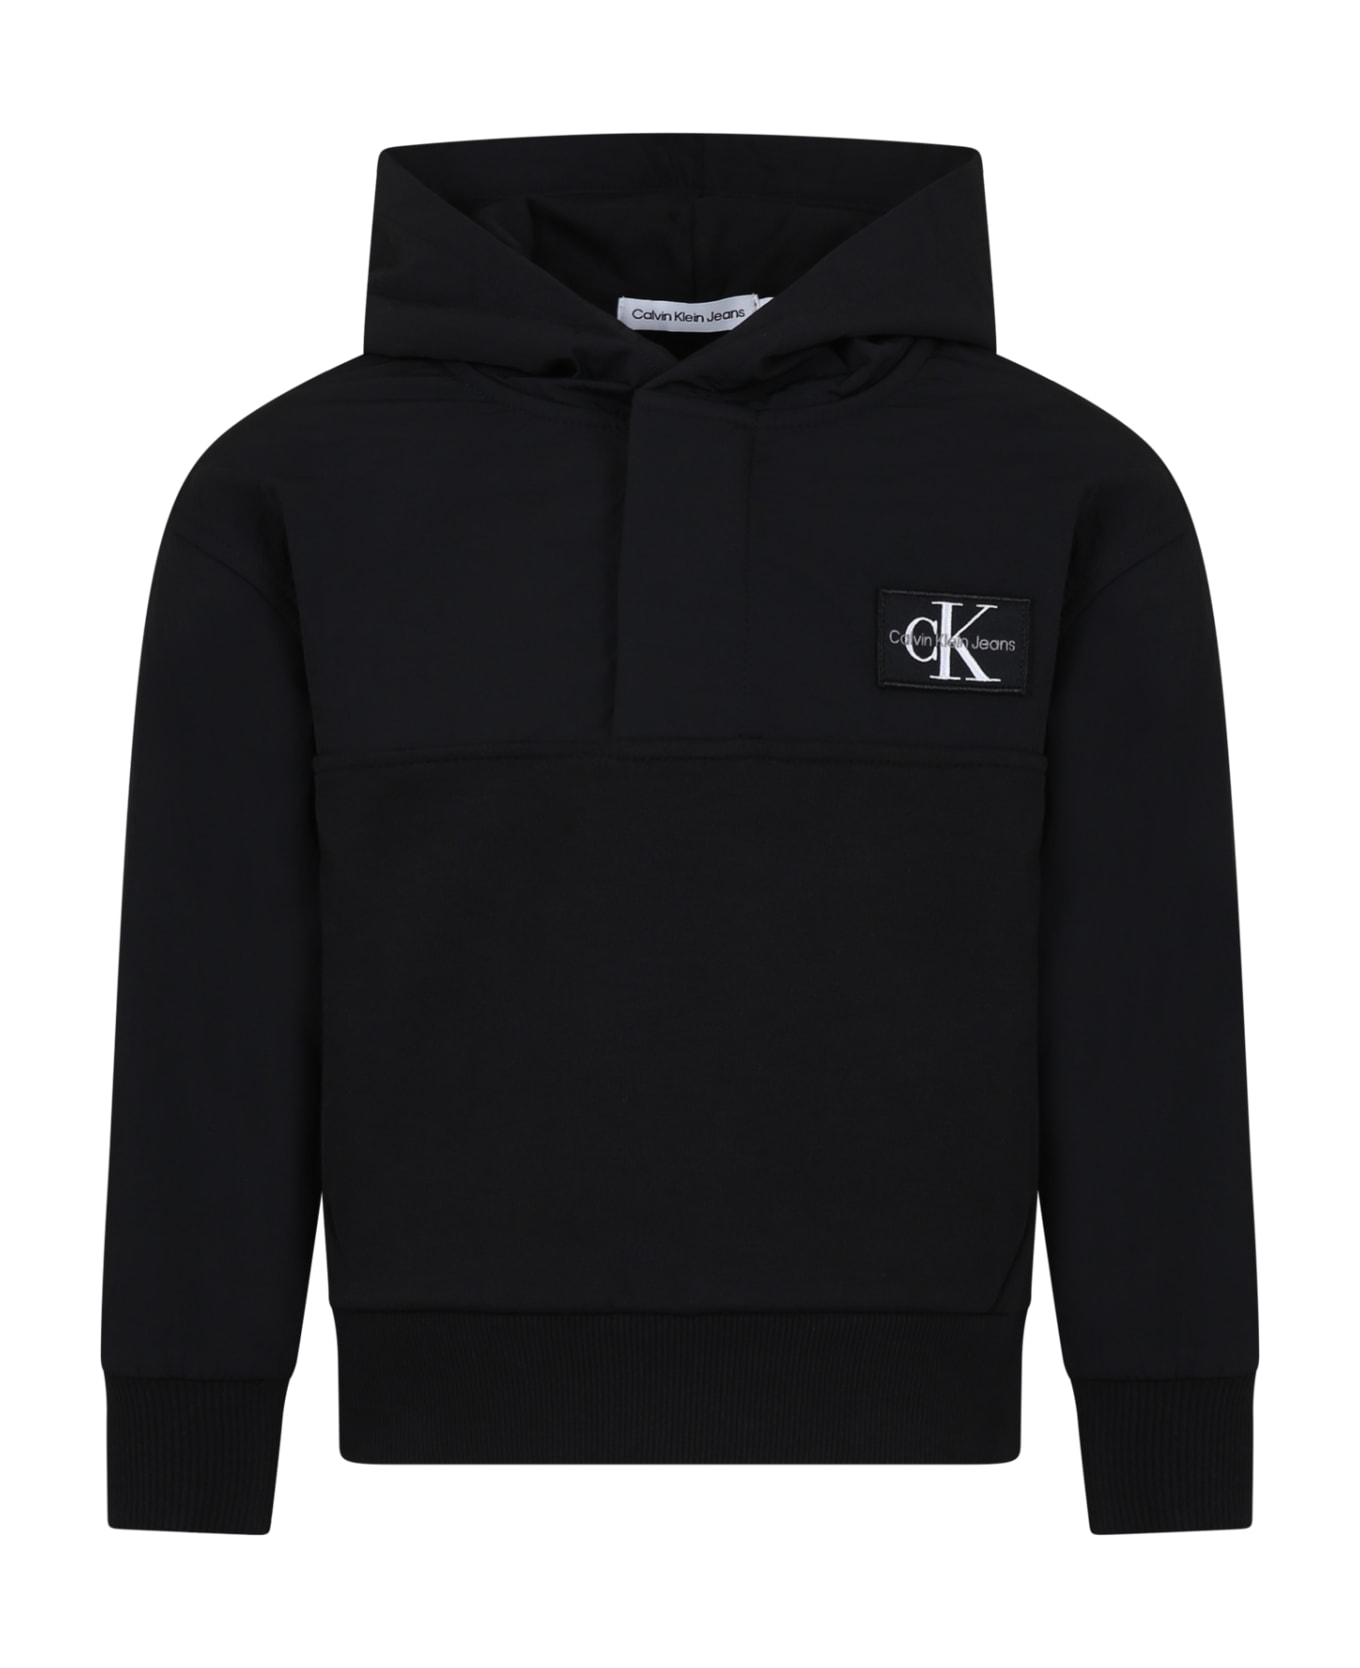 Calvin Klein Black Sweatshirt For Boy With Logo - Black